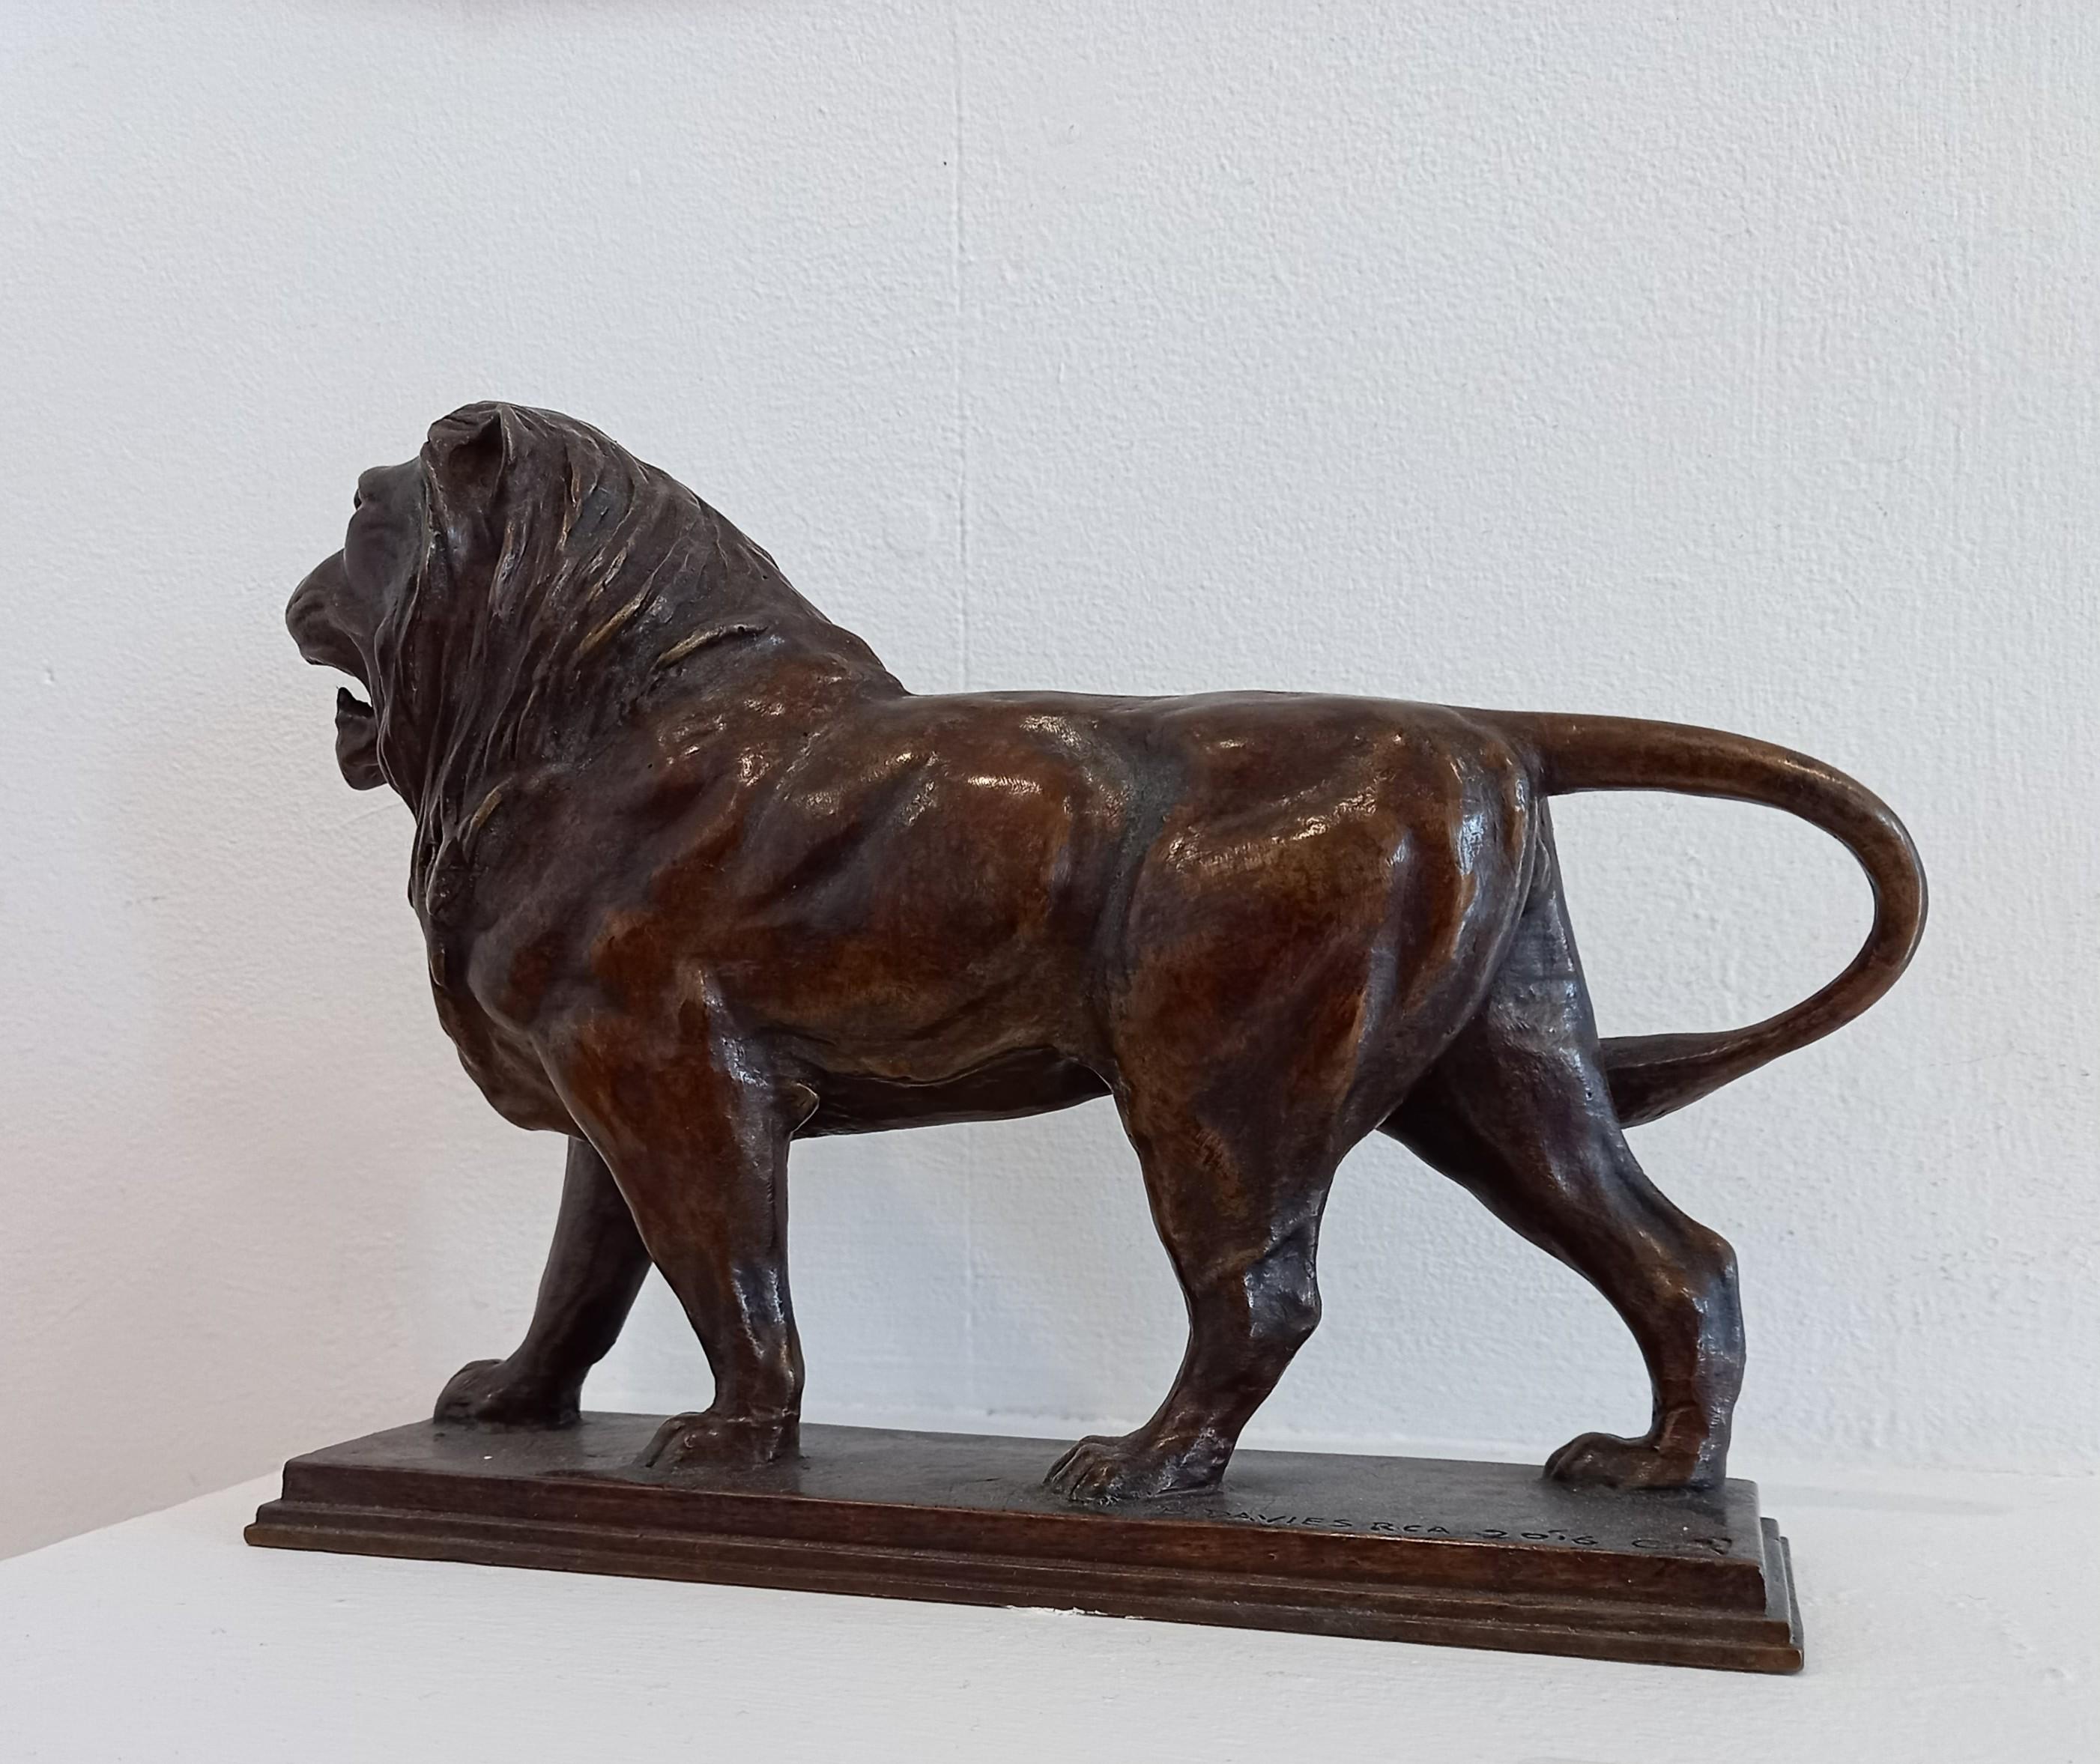 Lion - Sculpture by Barry Davies 